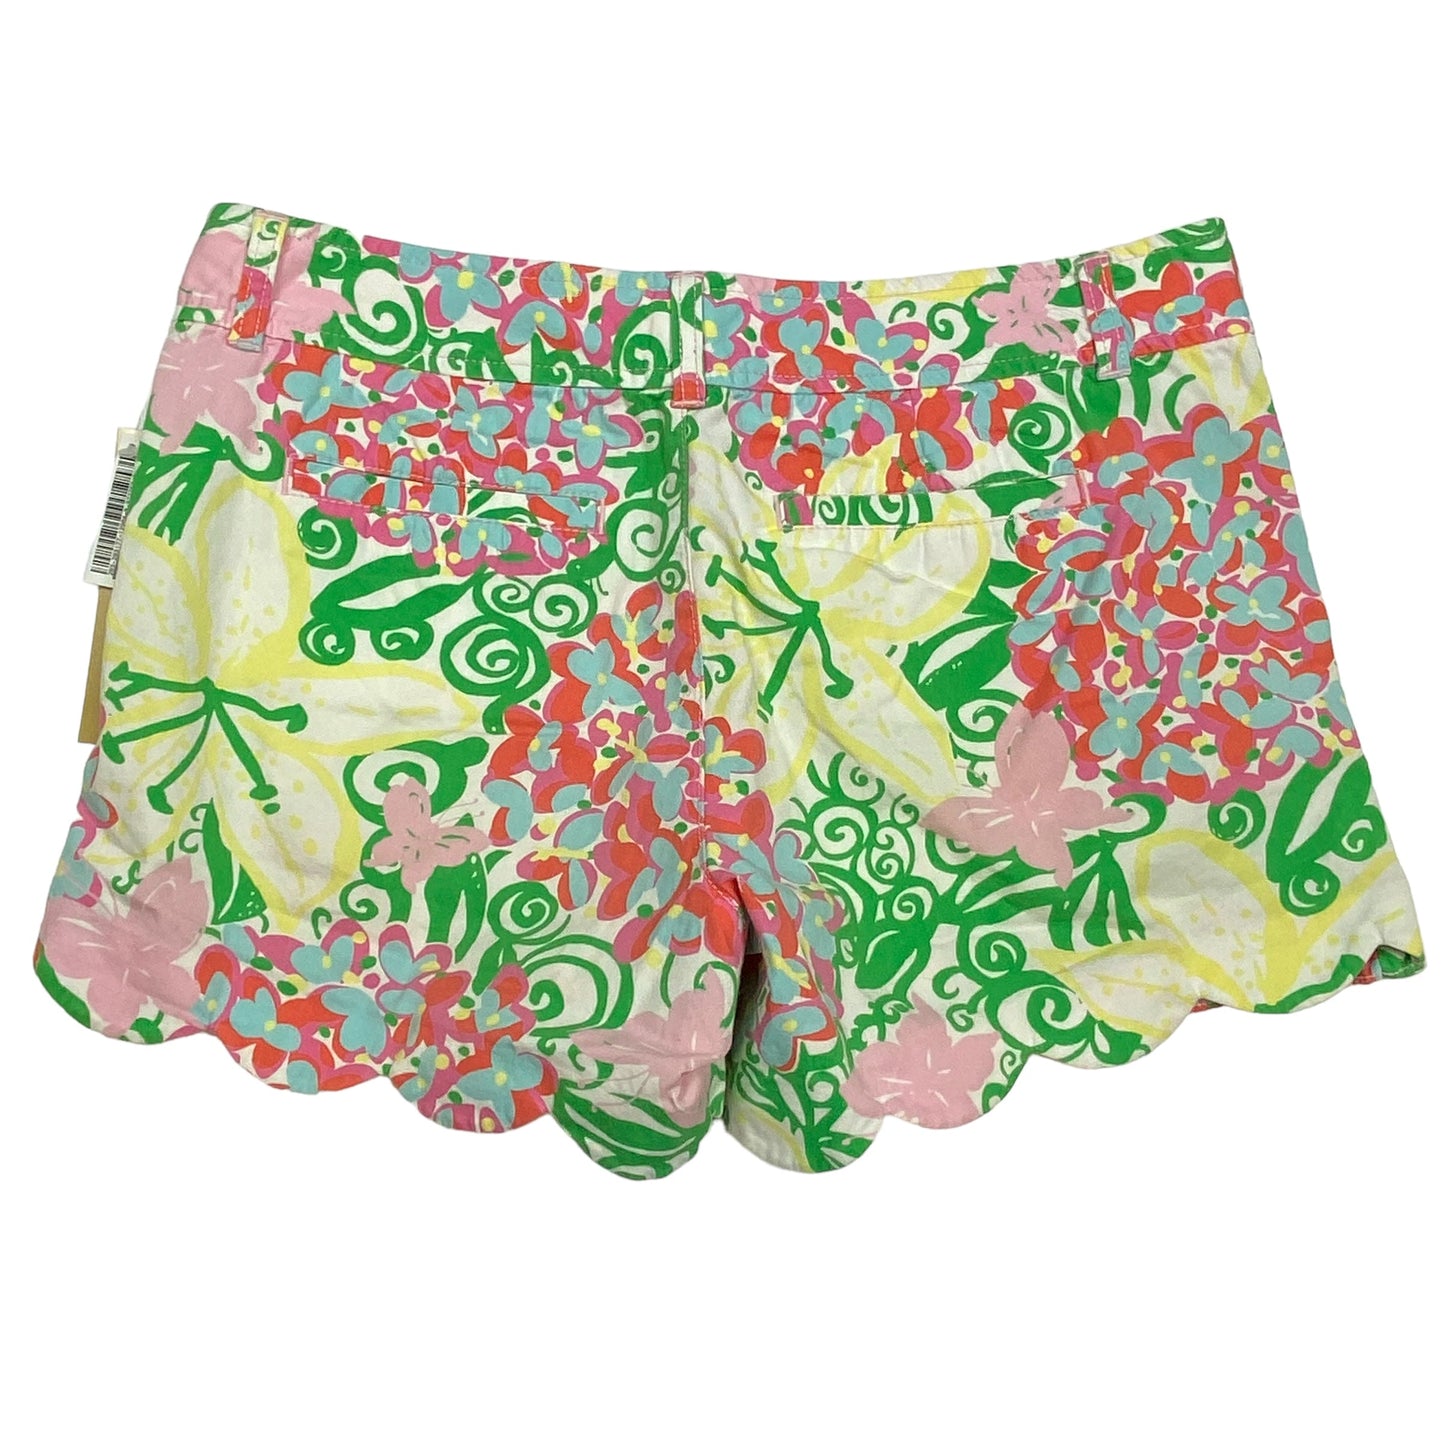 Green Shorts Designer Lilly Pulitzer, Size 6